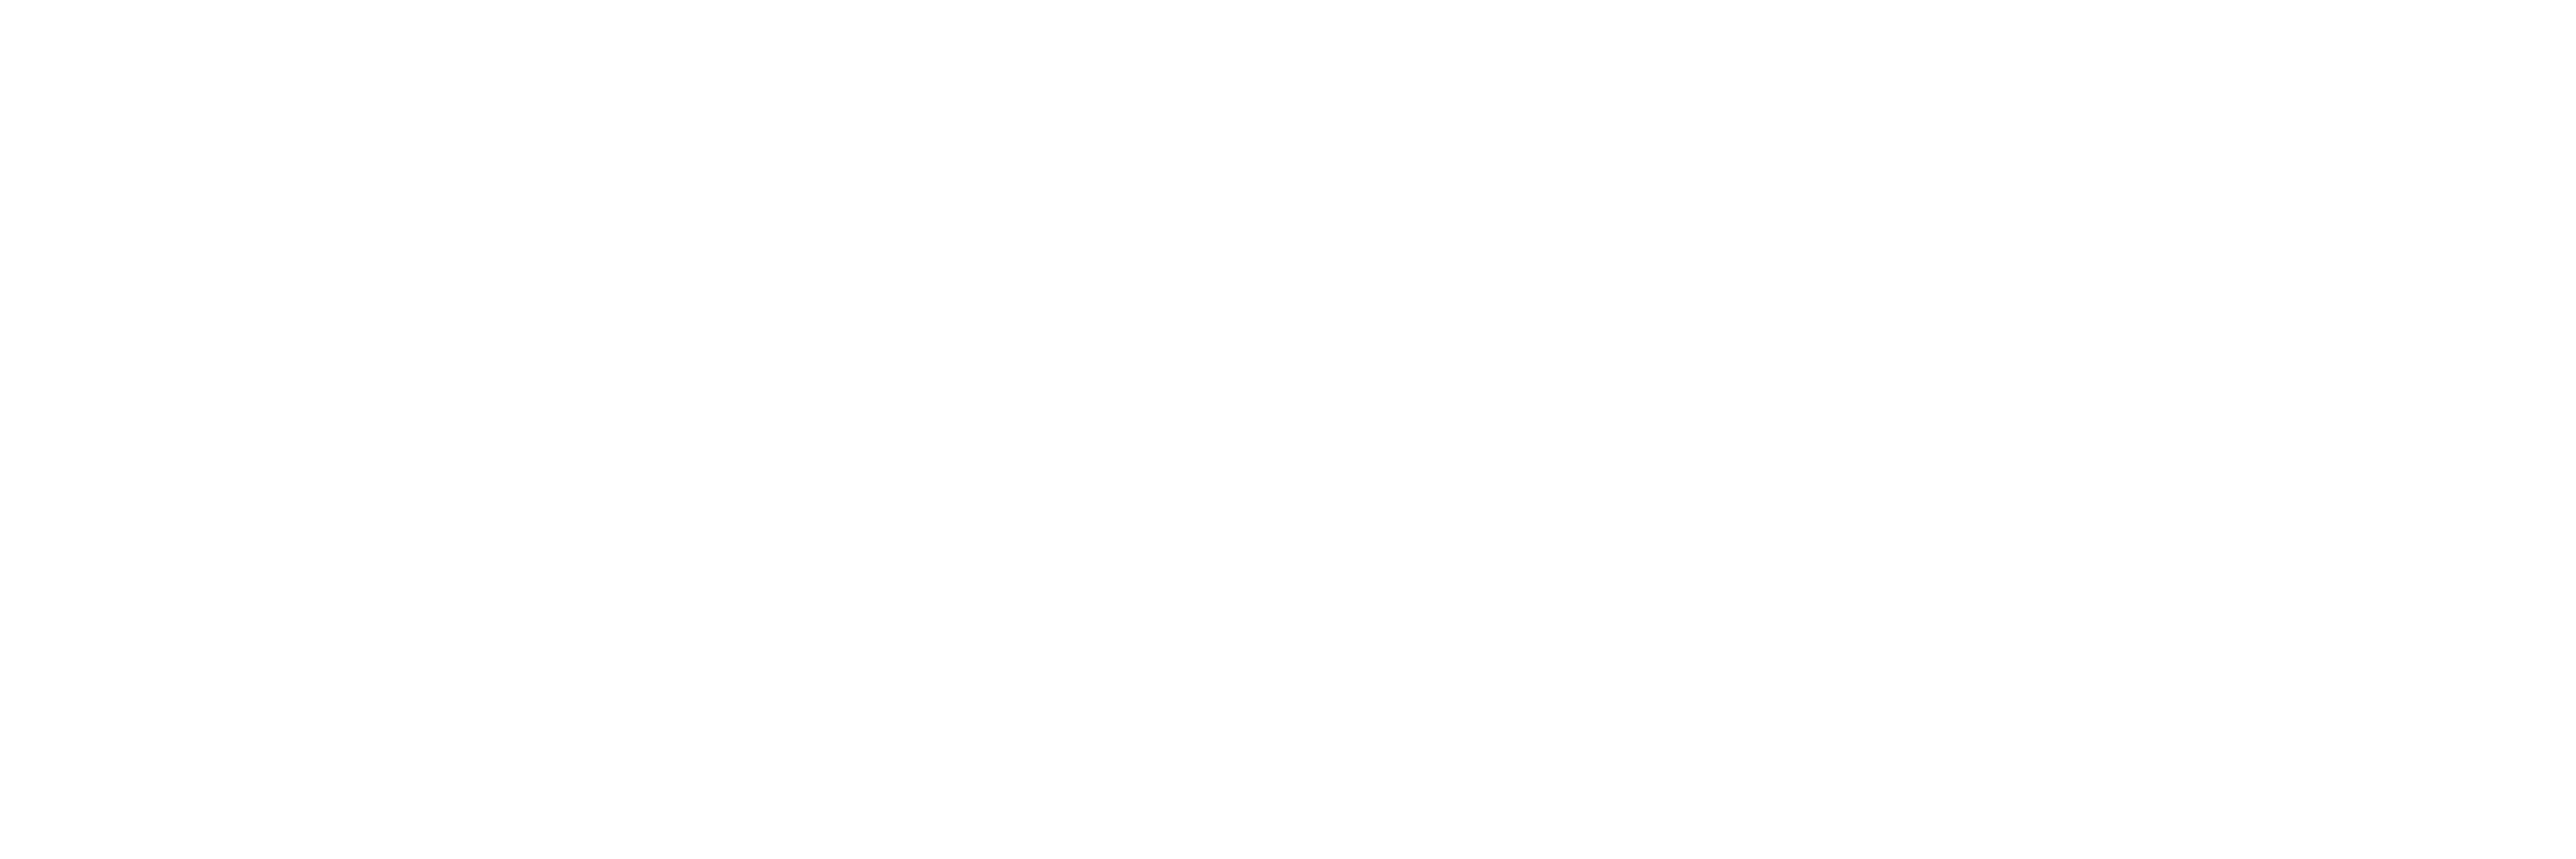 harrow collaborative pcn logo